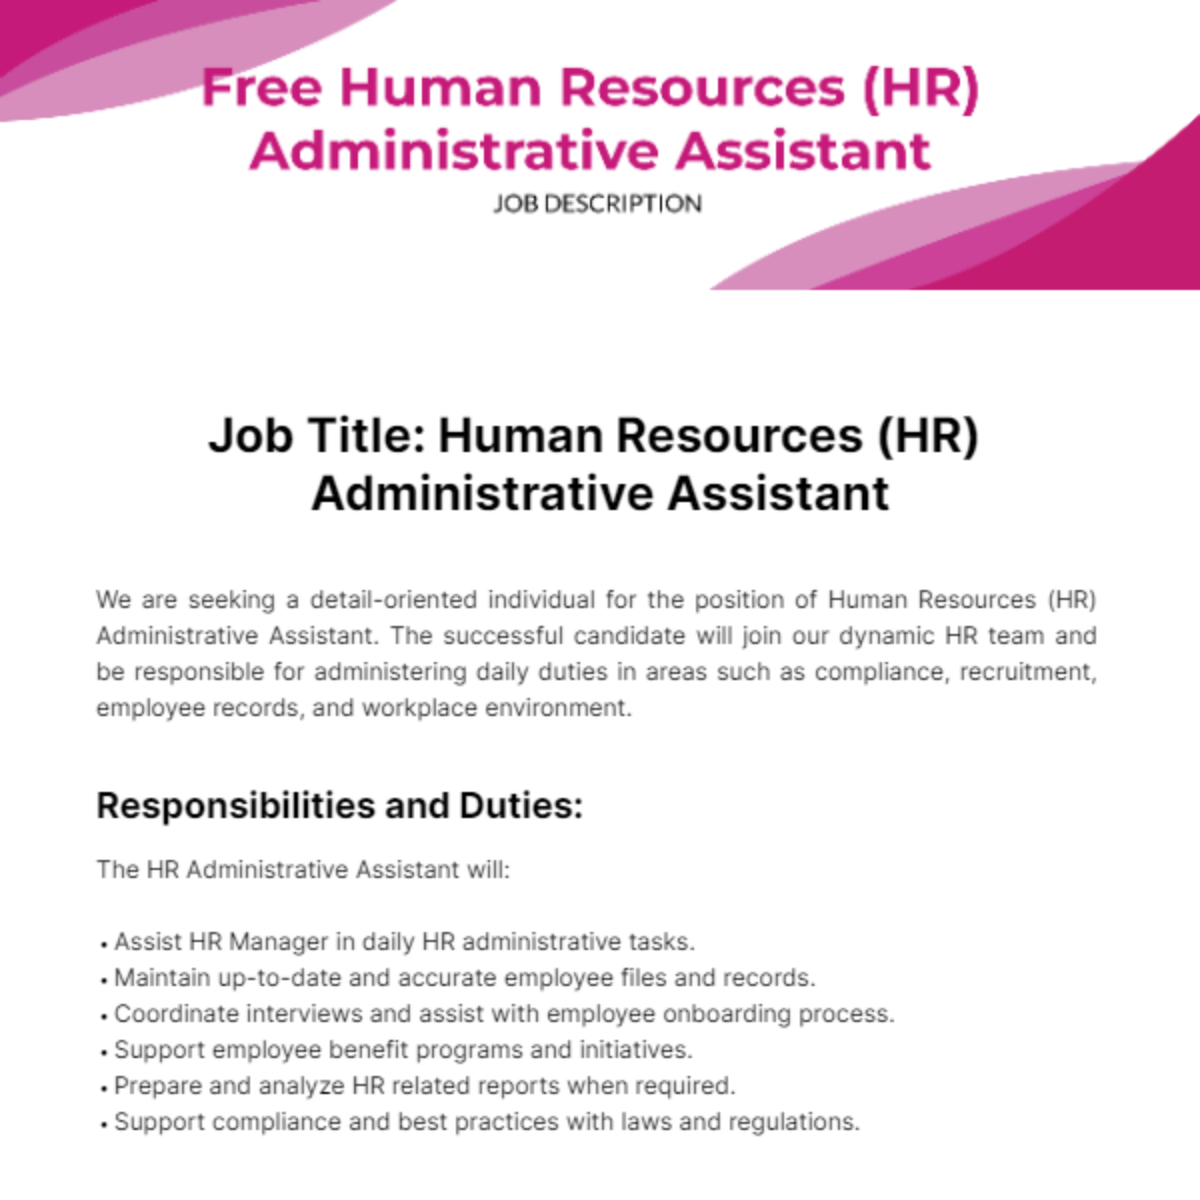 Human Resources (HR) Administrative Assistant Job Description Template